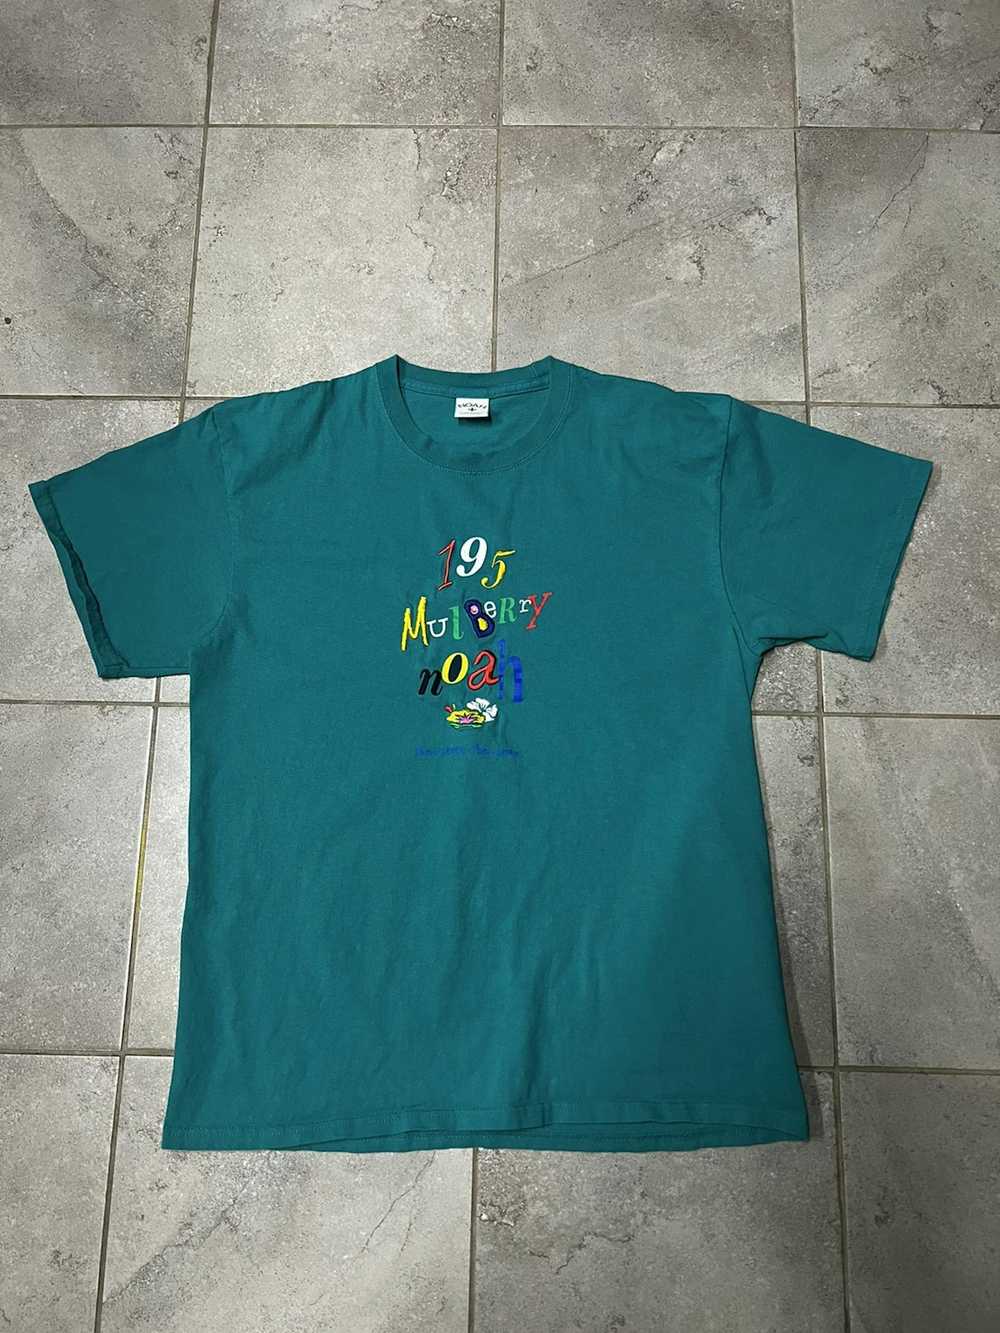 Noah Noah Address Tee T Shirt Size Large Green - image 4